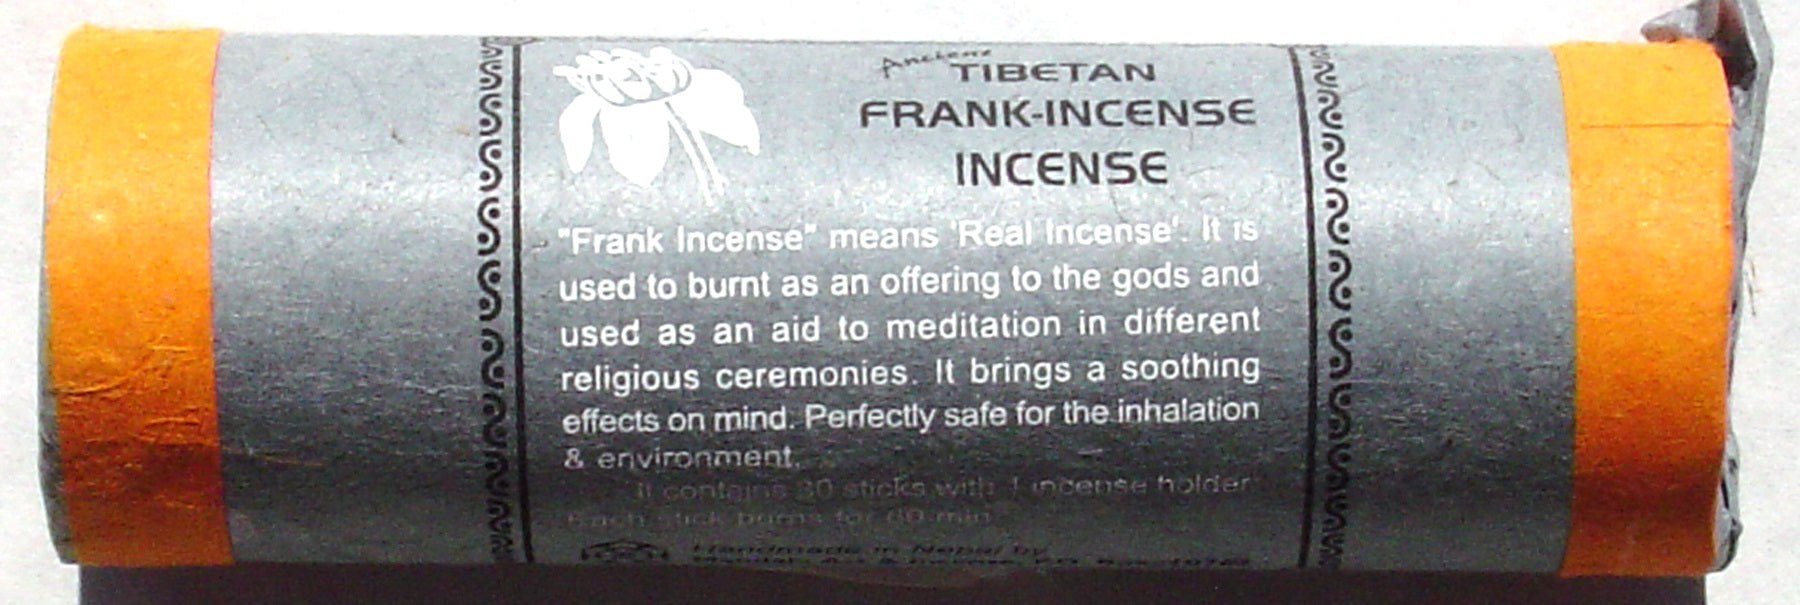 Tibetan Frankincense Incense